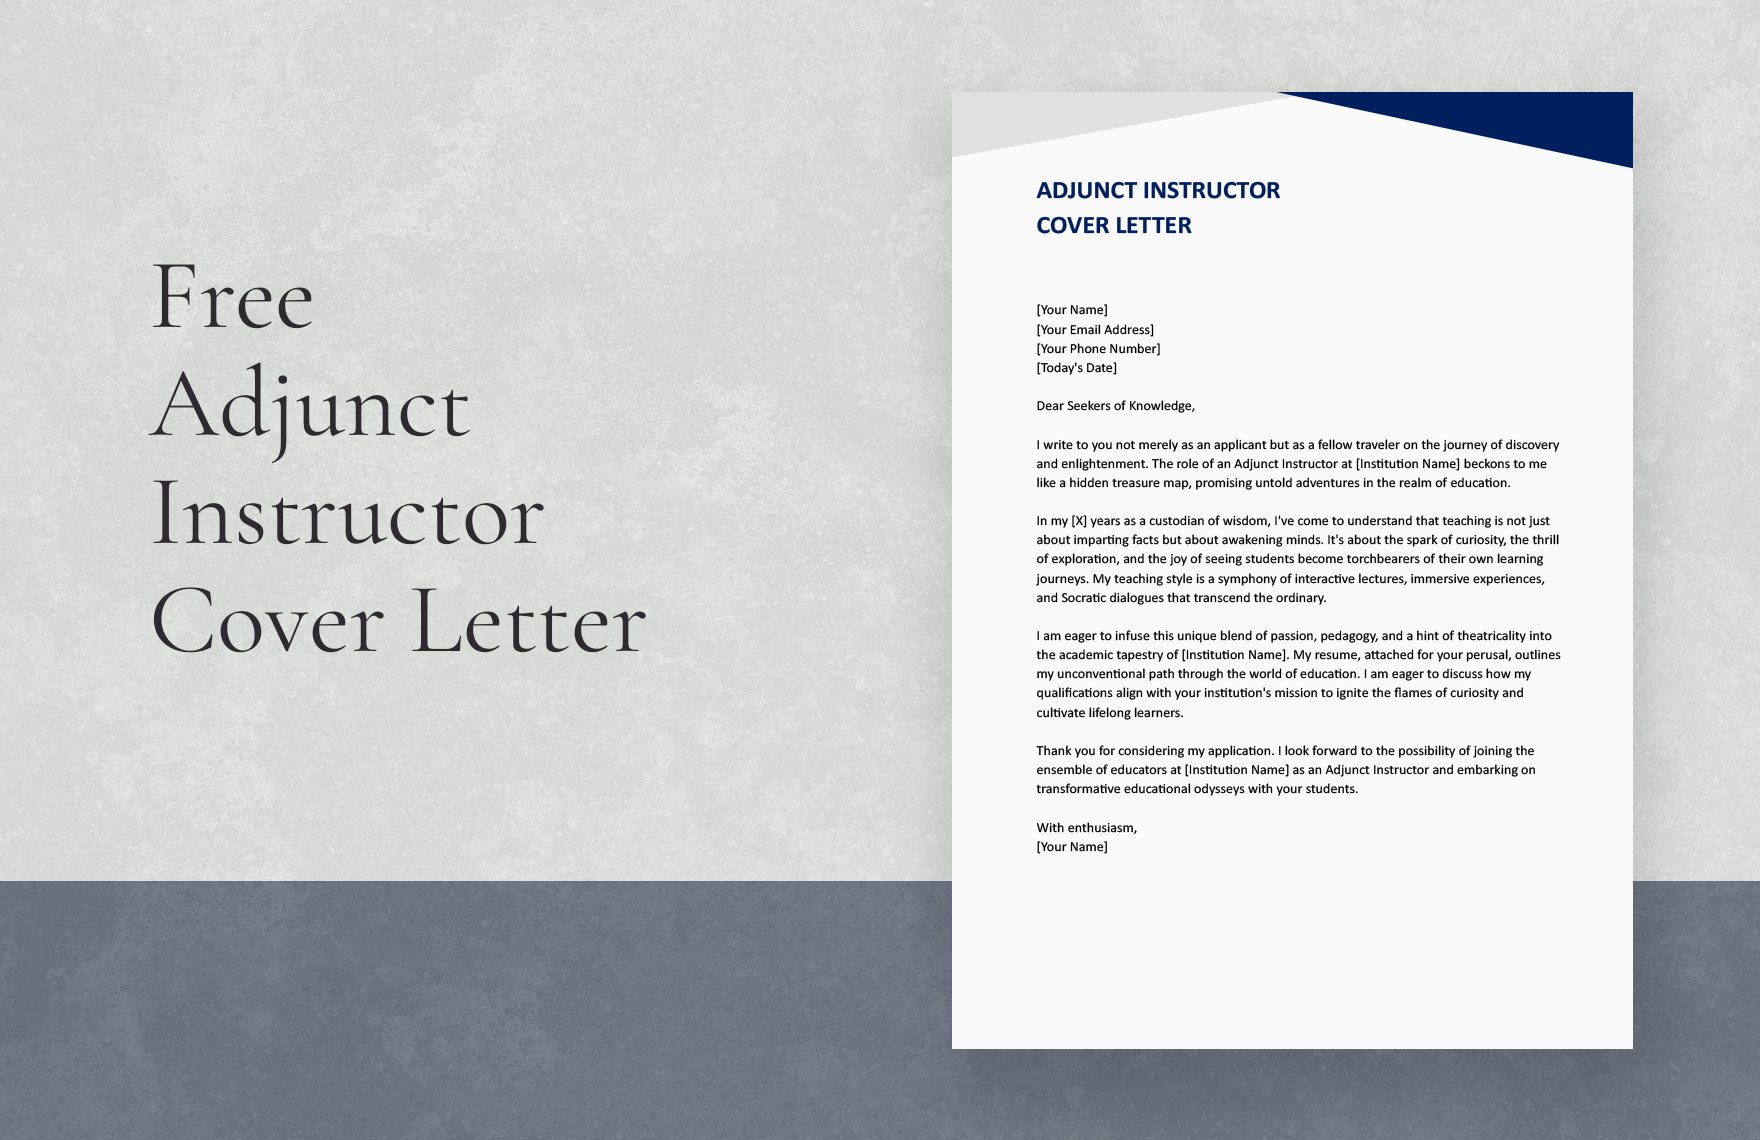 Free Adjunct Instructor Cover Letter